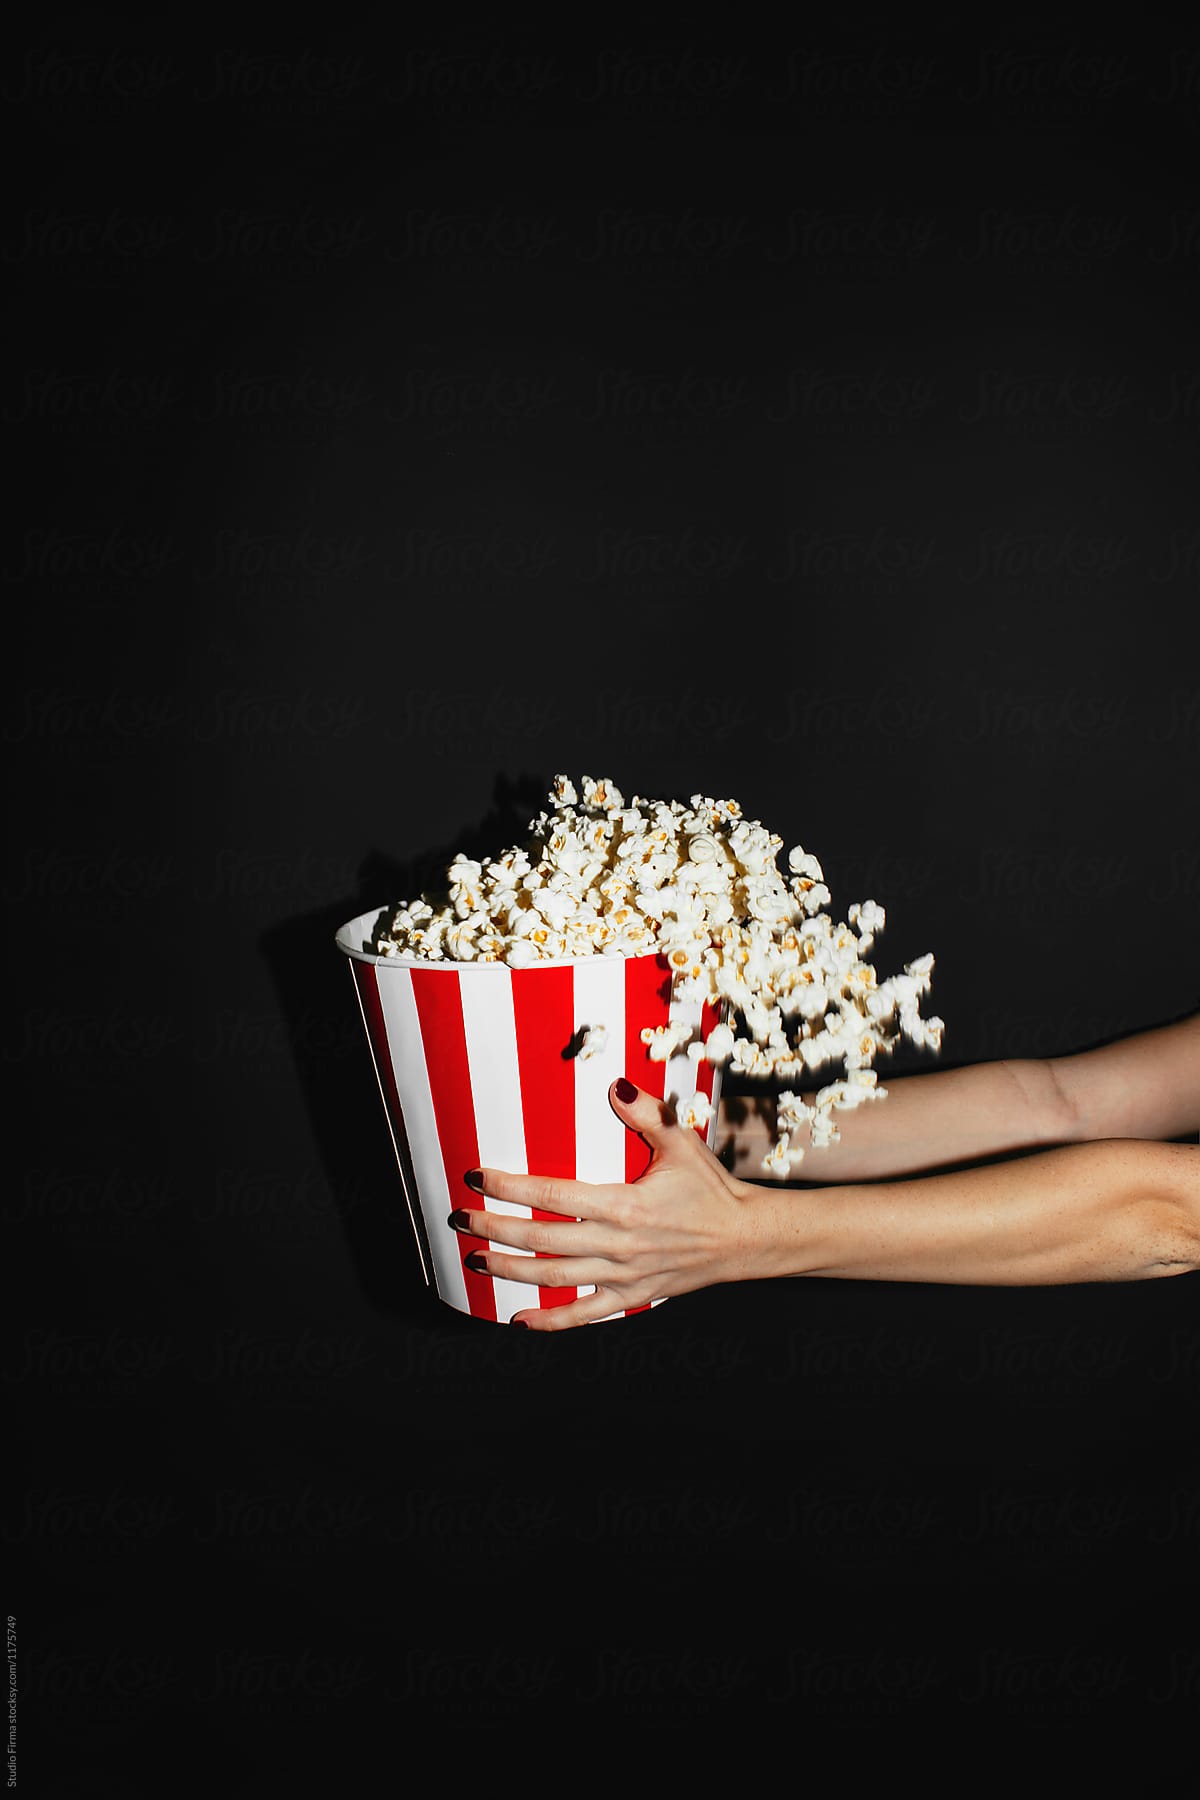 Movie Time! Popcorn?